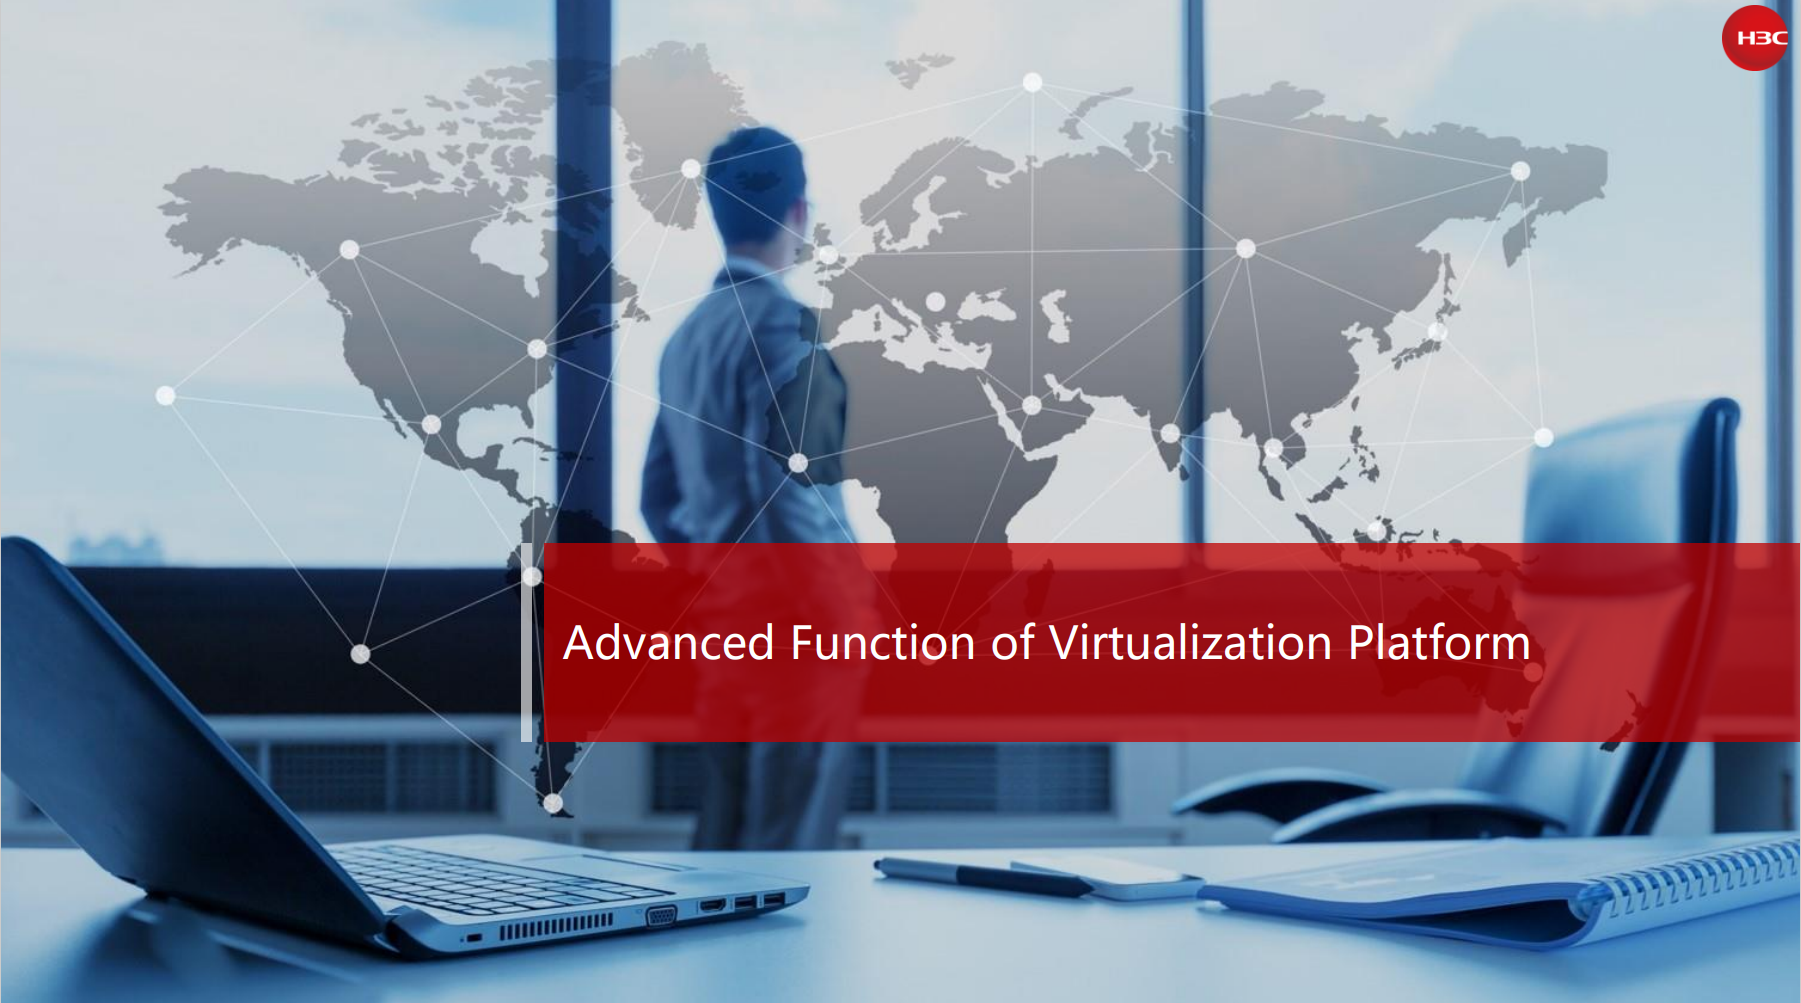 05-Advanced Function of Virtualization Platform.PNG